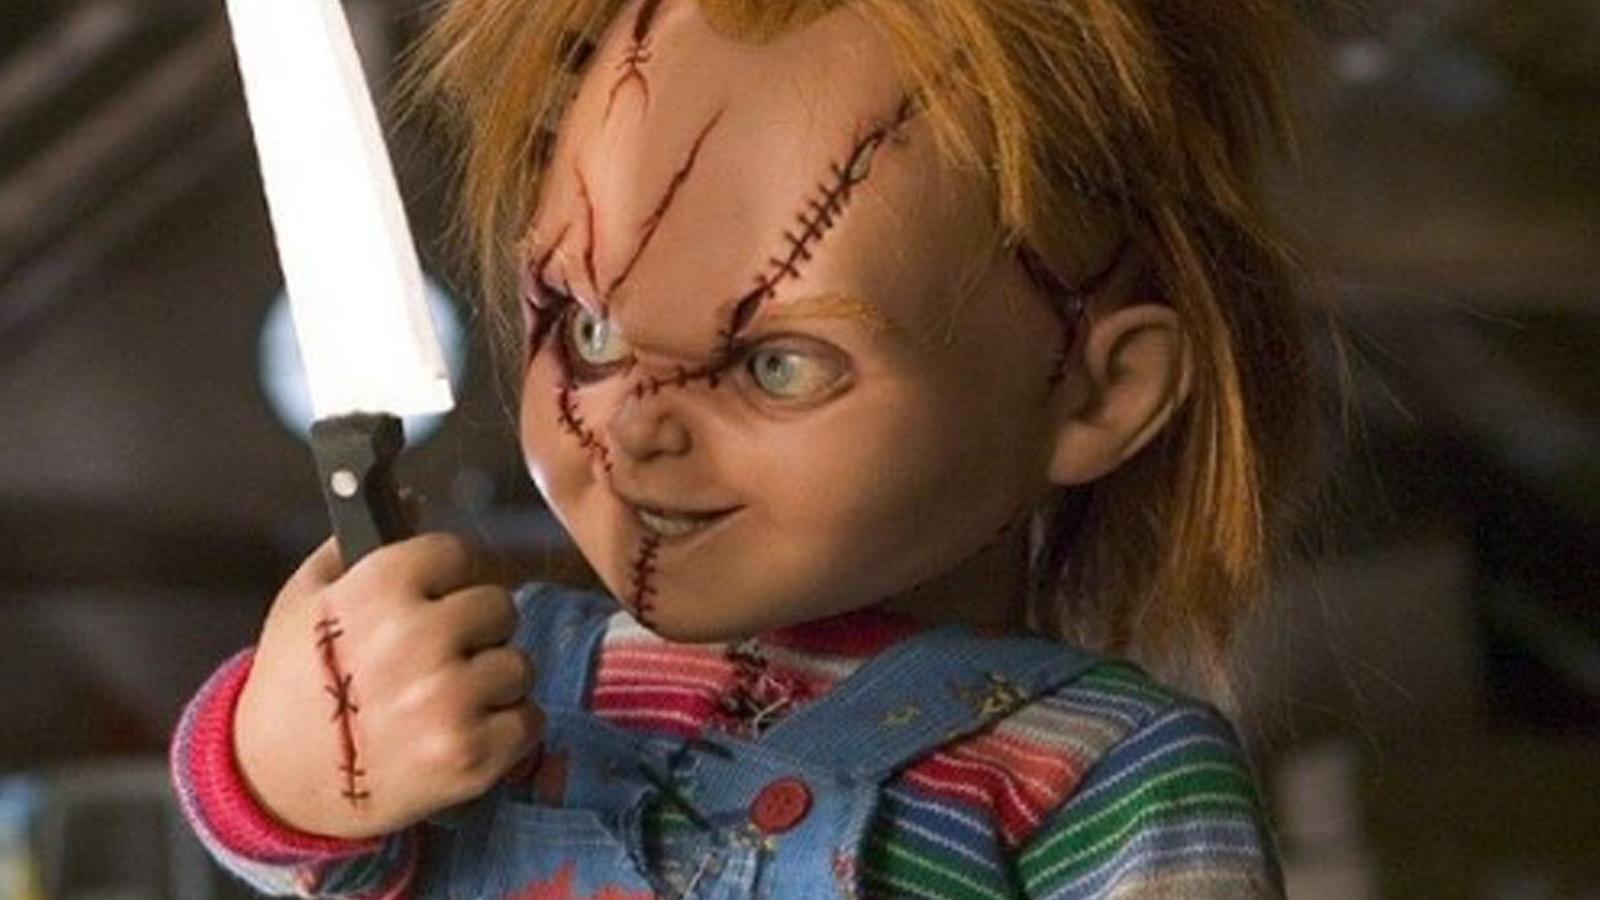 Chucky doll taken away in handcuffs by Mexican police for wielding knife in public